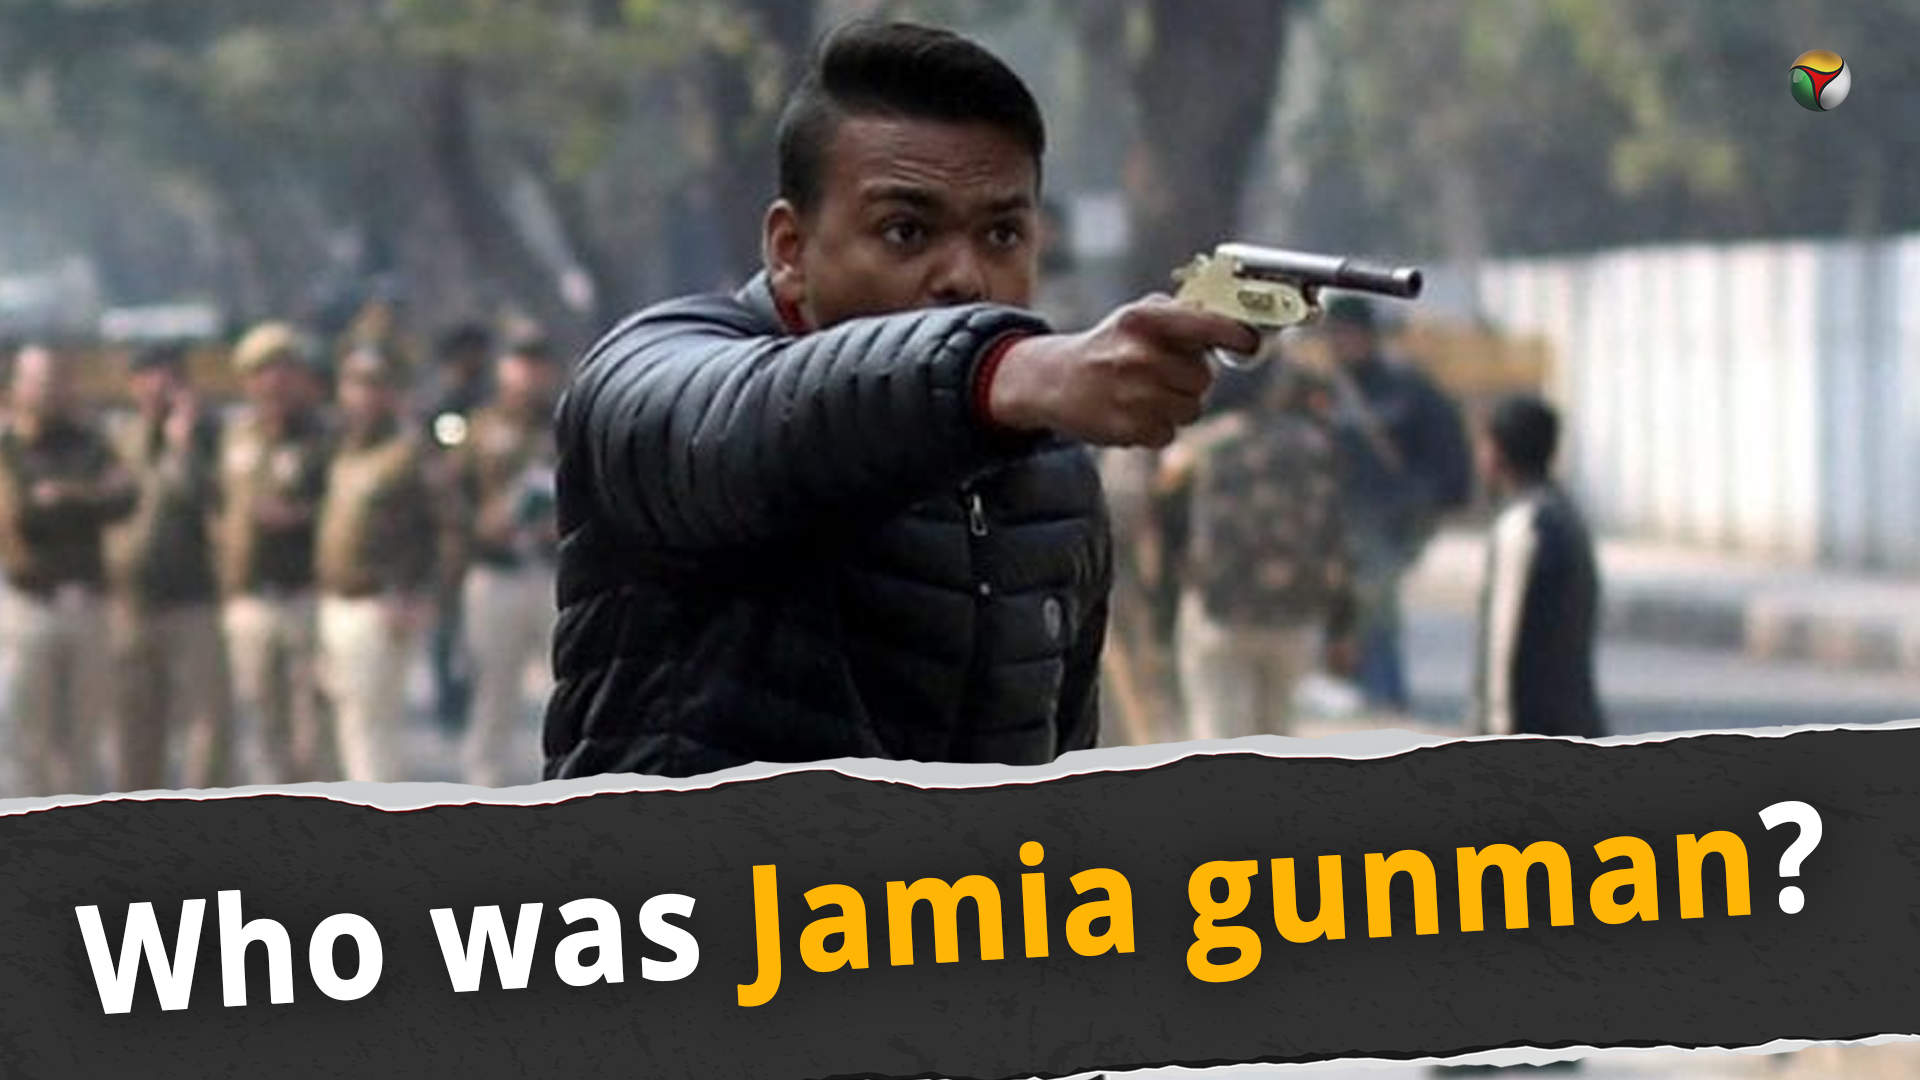 Gunman opens fire at Jamia, student injured